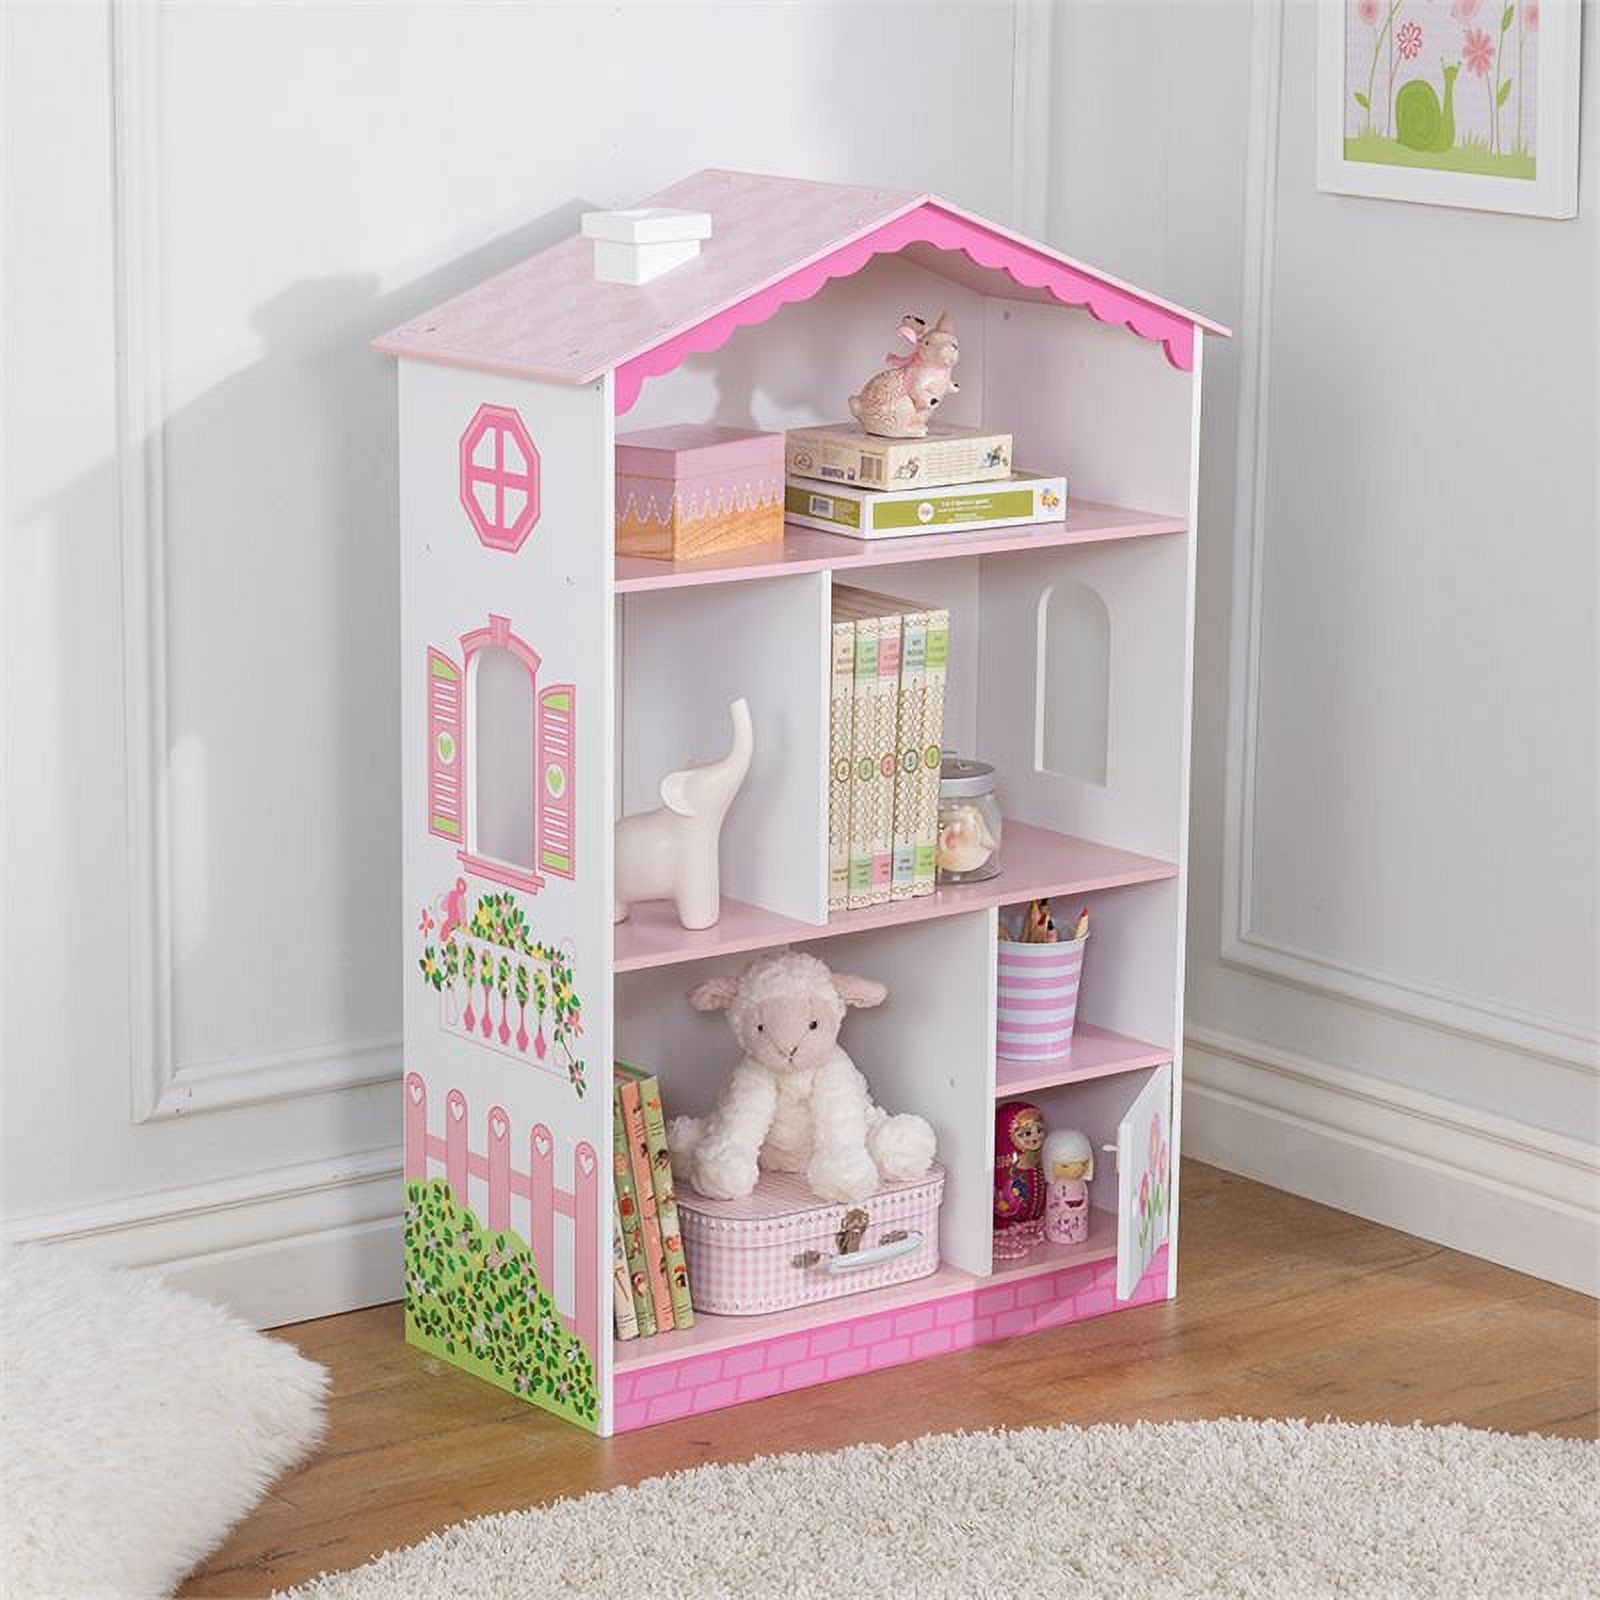 KidKraft Dollhouse Cottage Wooden Bookcase, Pink & White - image 3 of 10